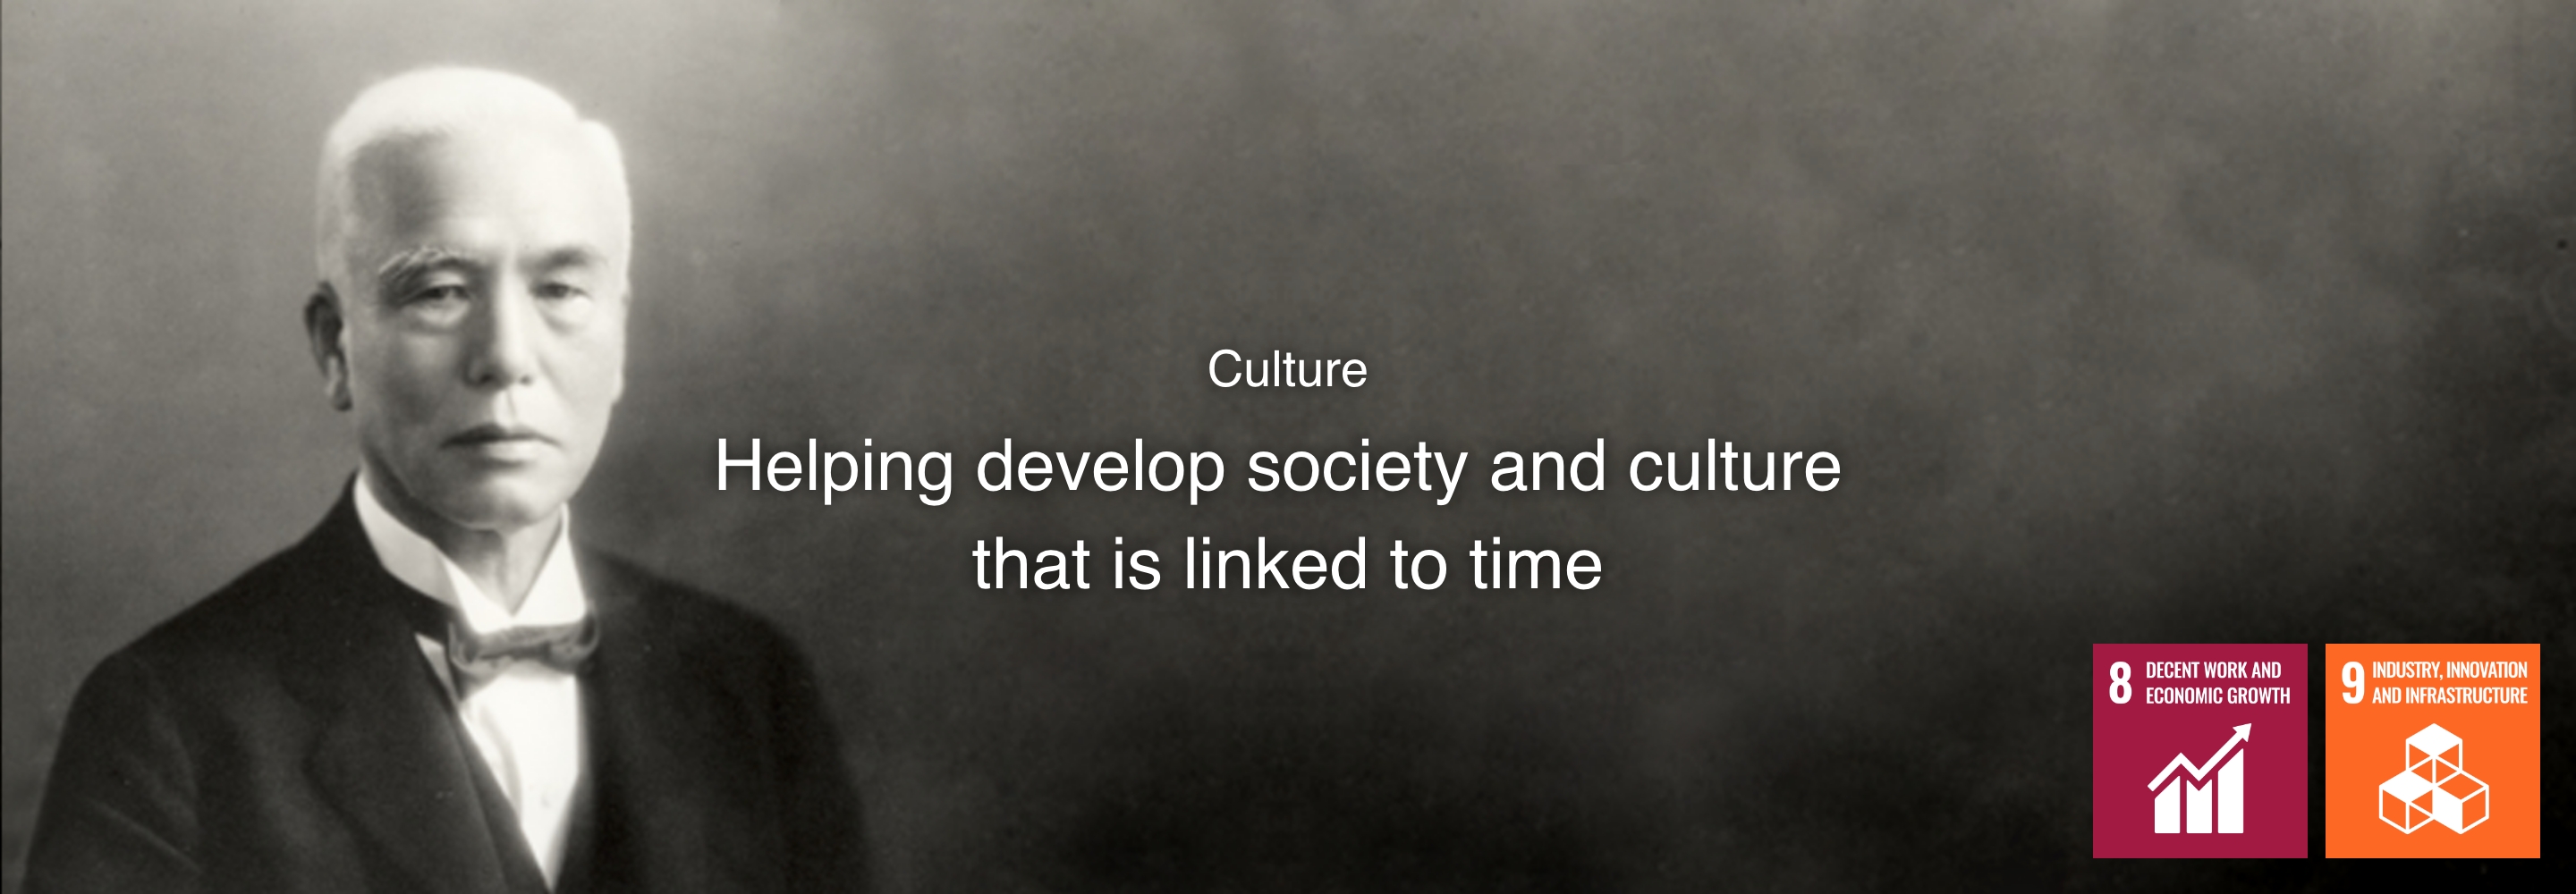 Culture 對含括「時間」的社會與文化發展有所貢獻